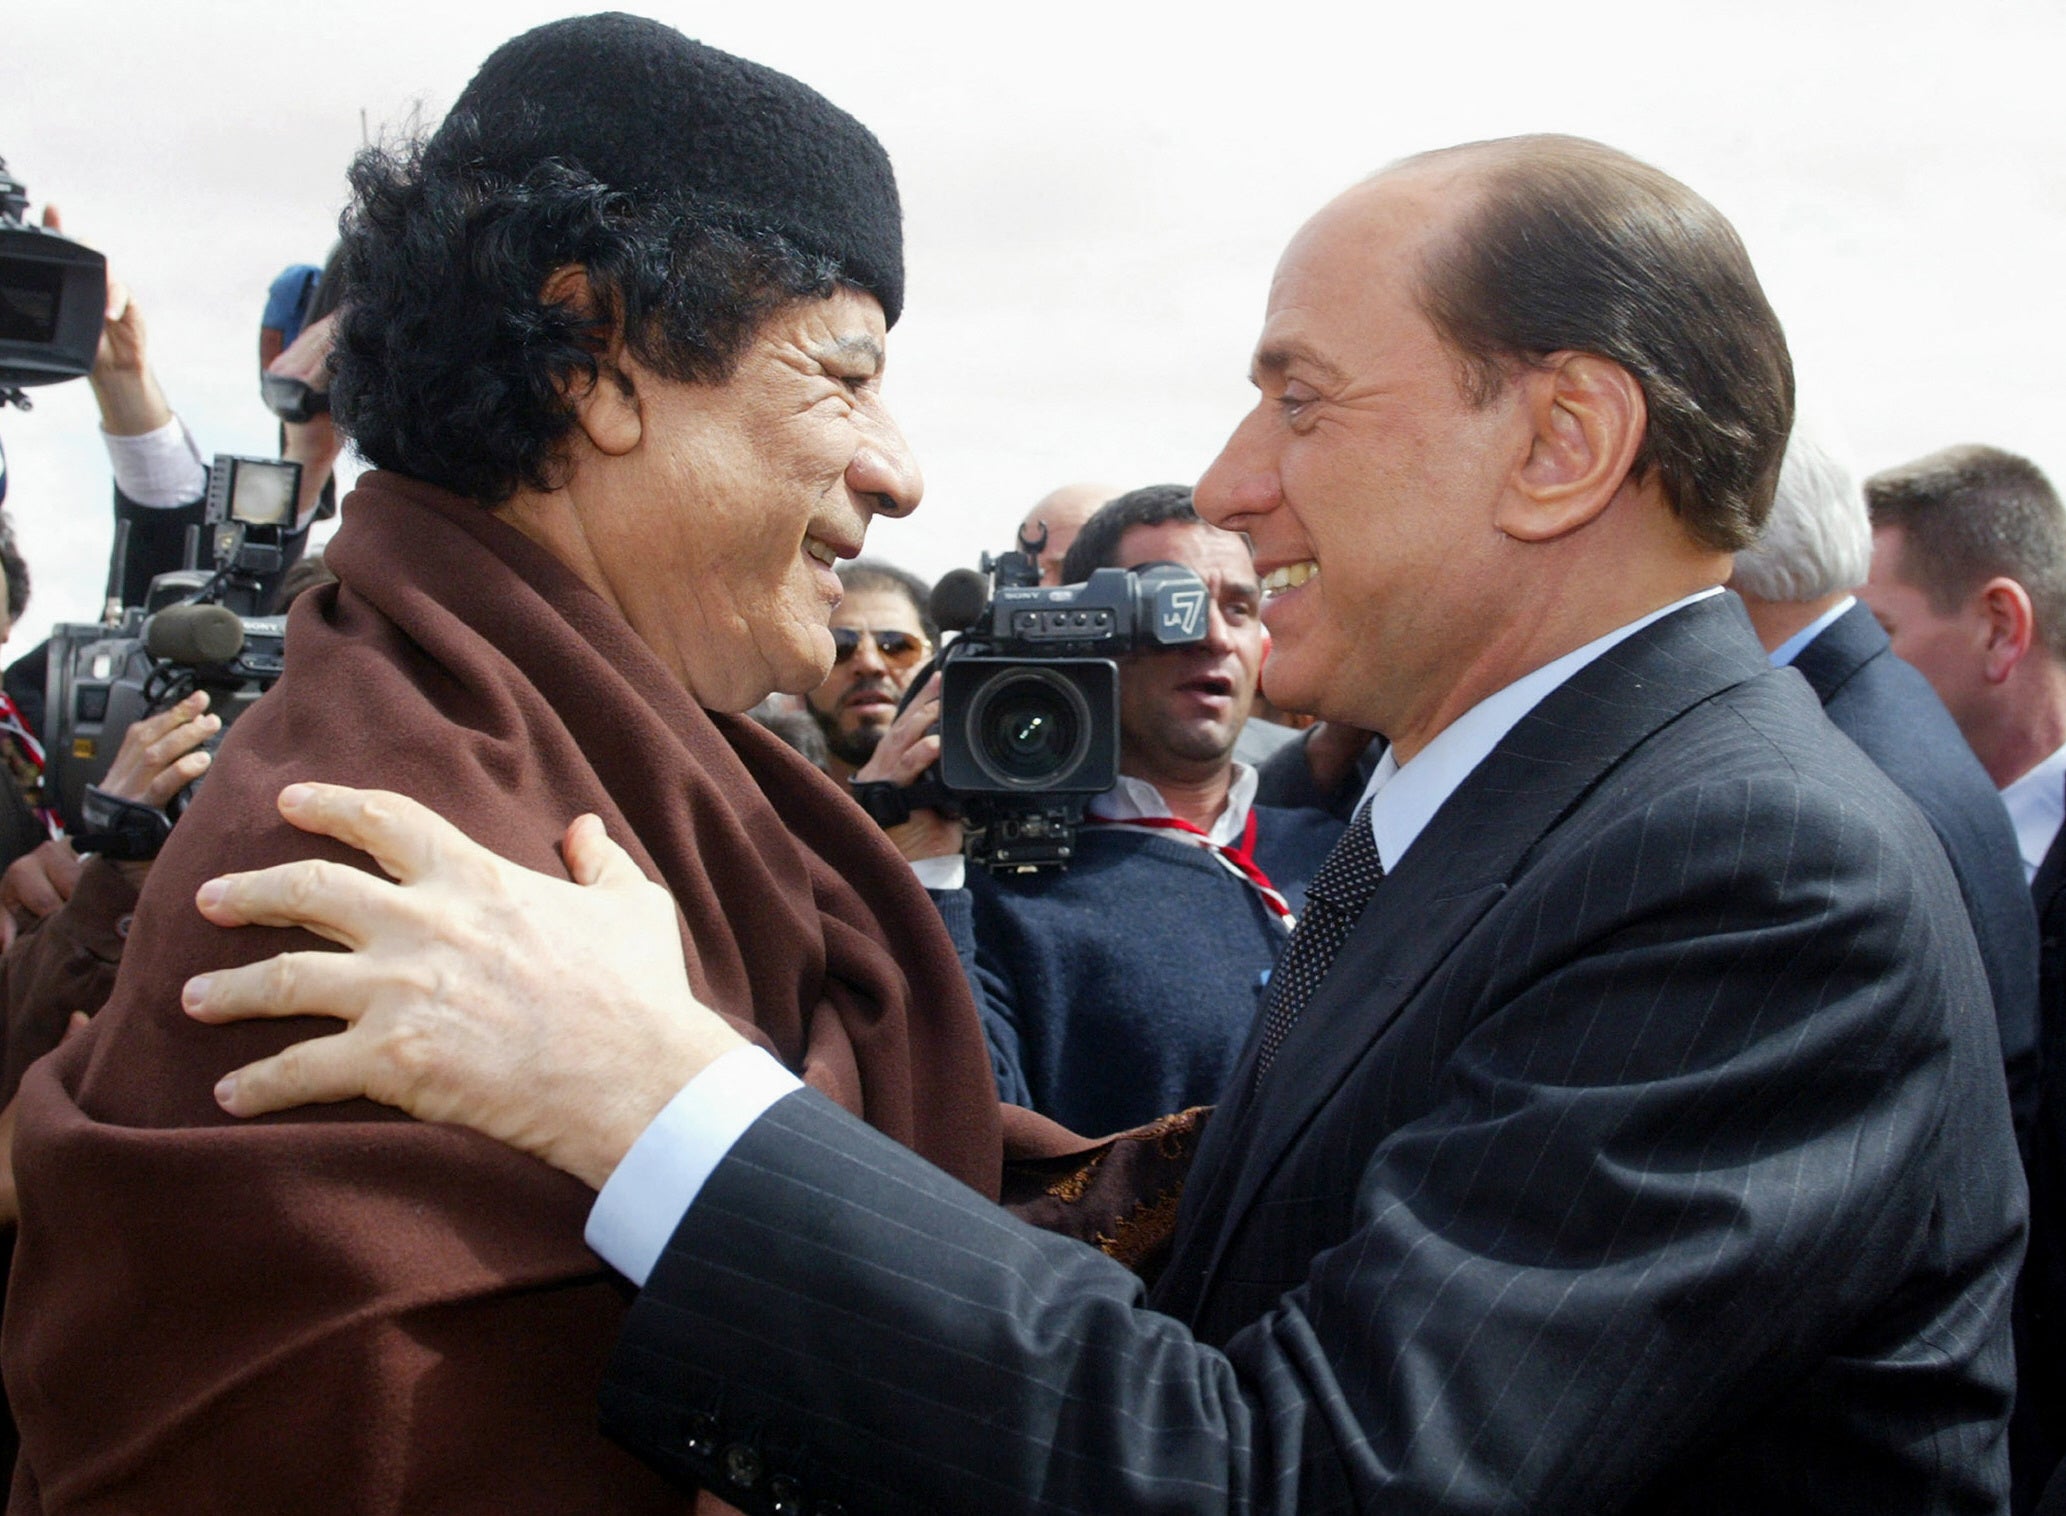 Libyan leader Muammar Gaddafi, left, greets Berlusconi during a meeting in Sirte on 10 February 2004